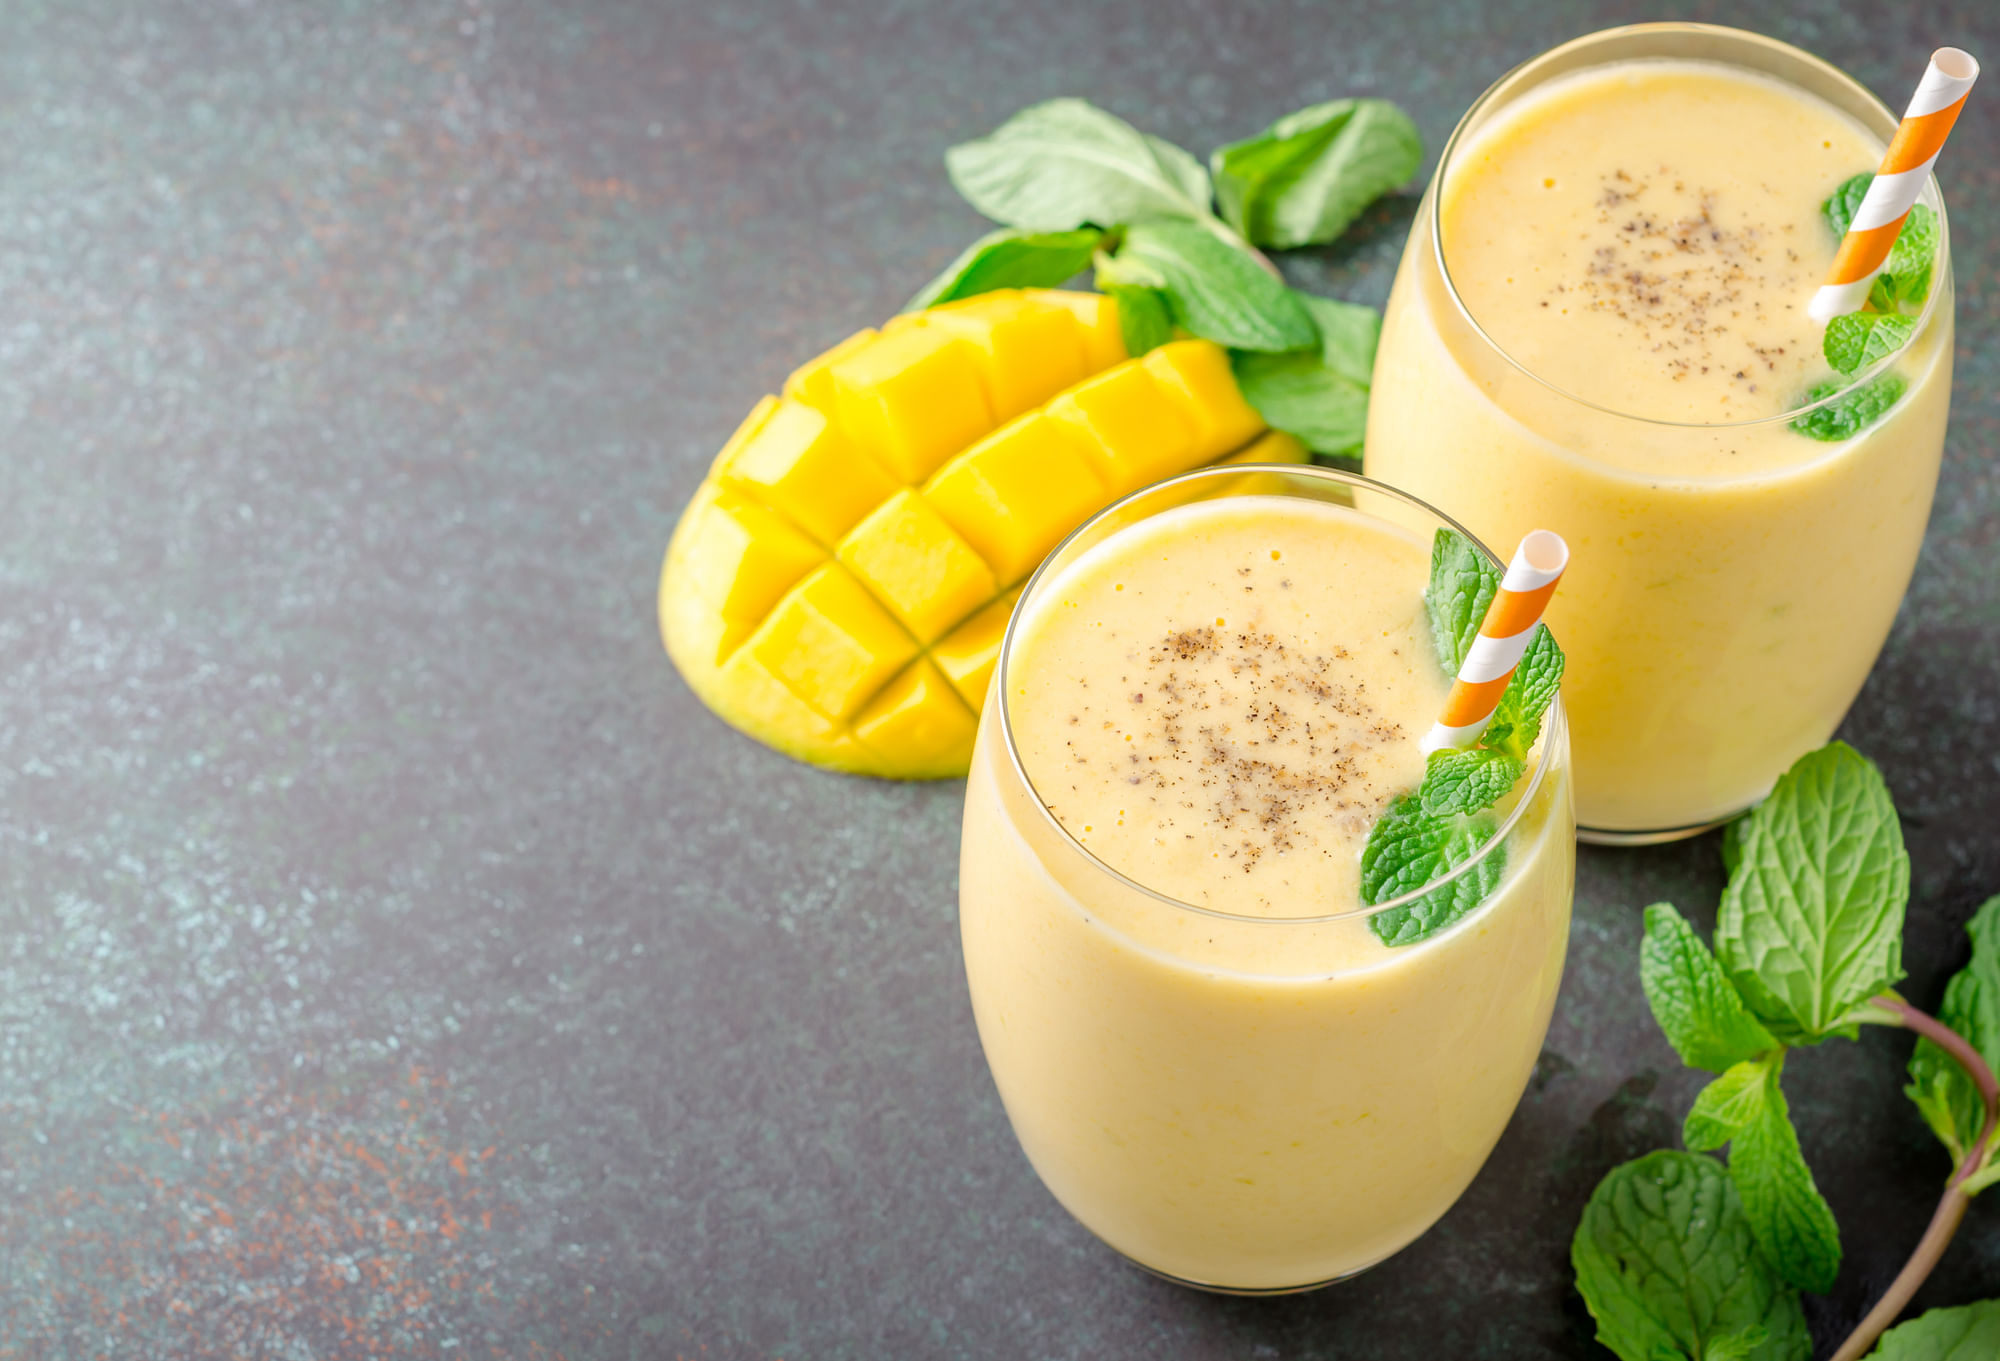 Mango Health Benefits